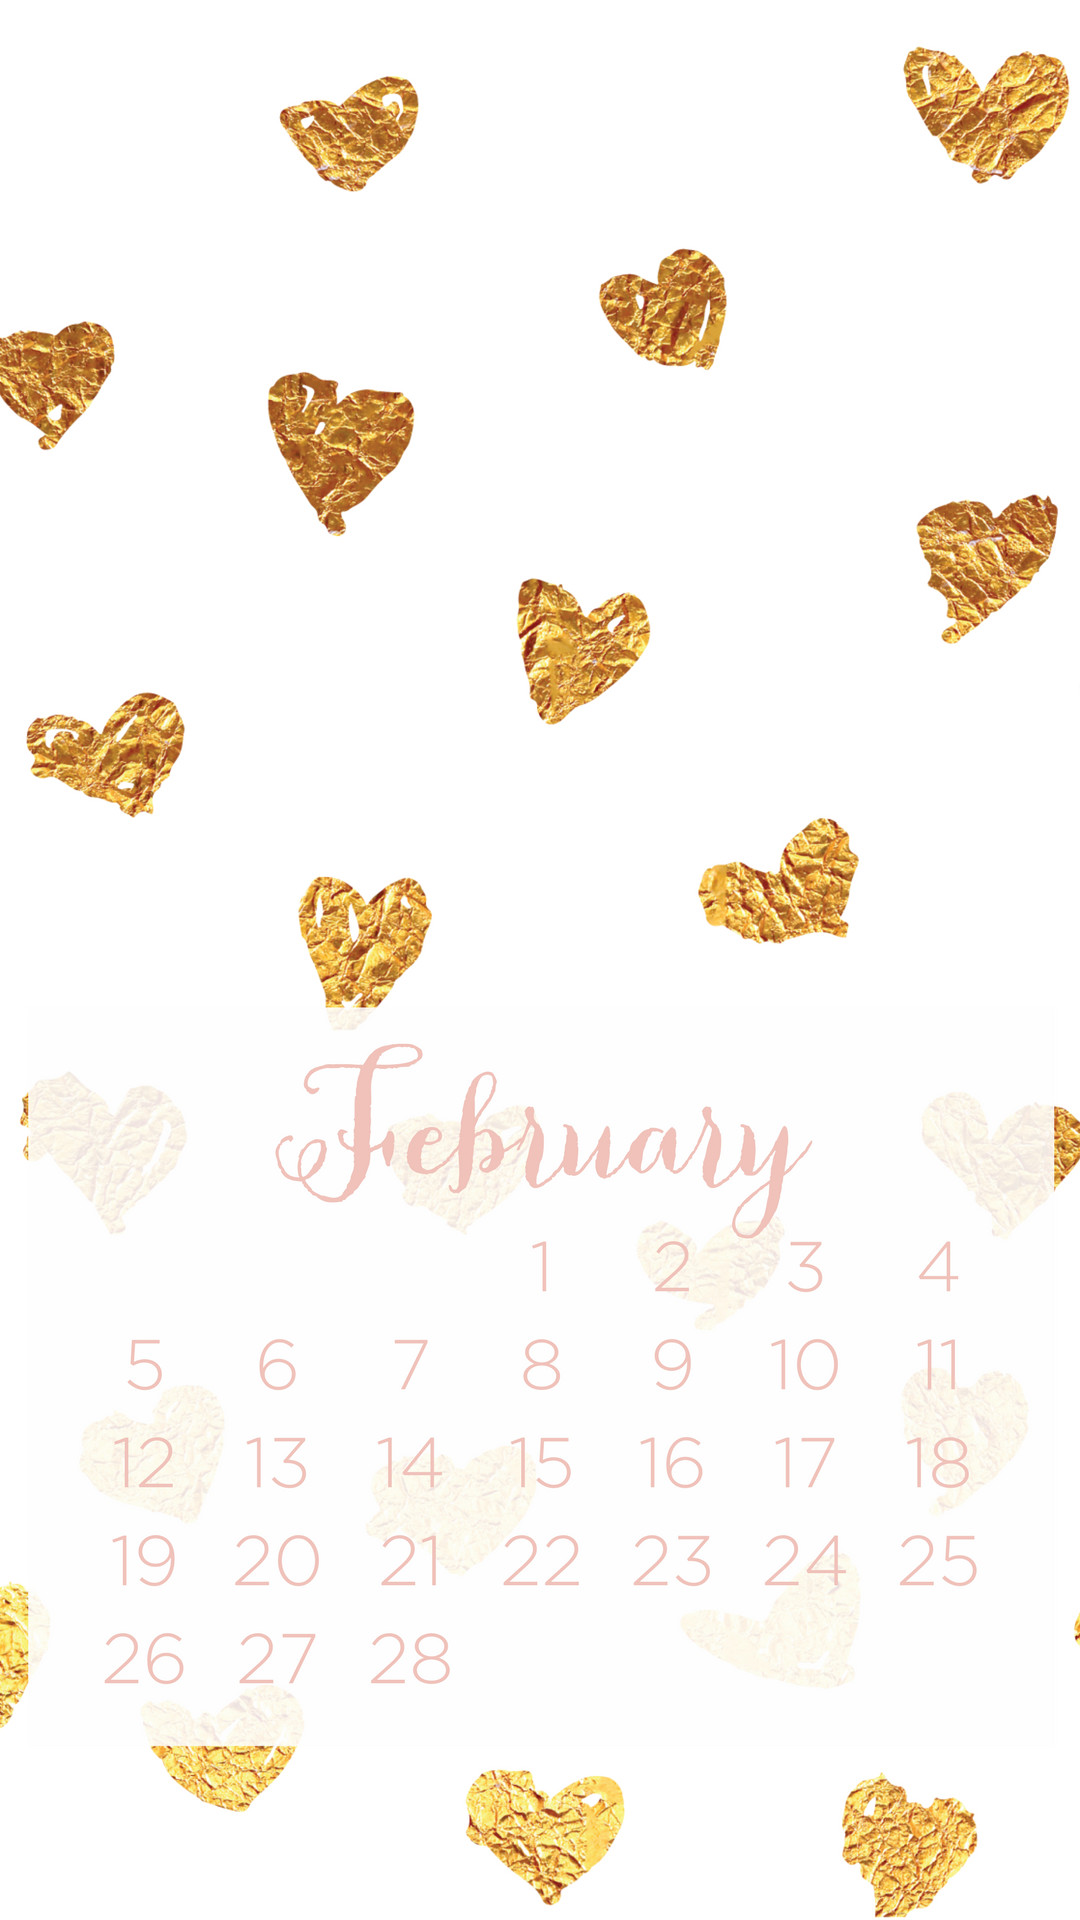 Click to download the foil heart February calendar wallpaper